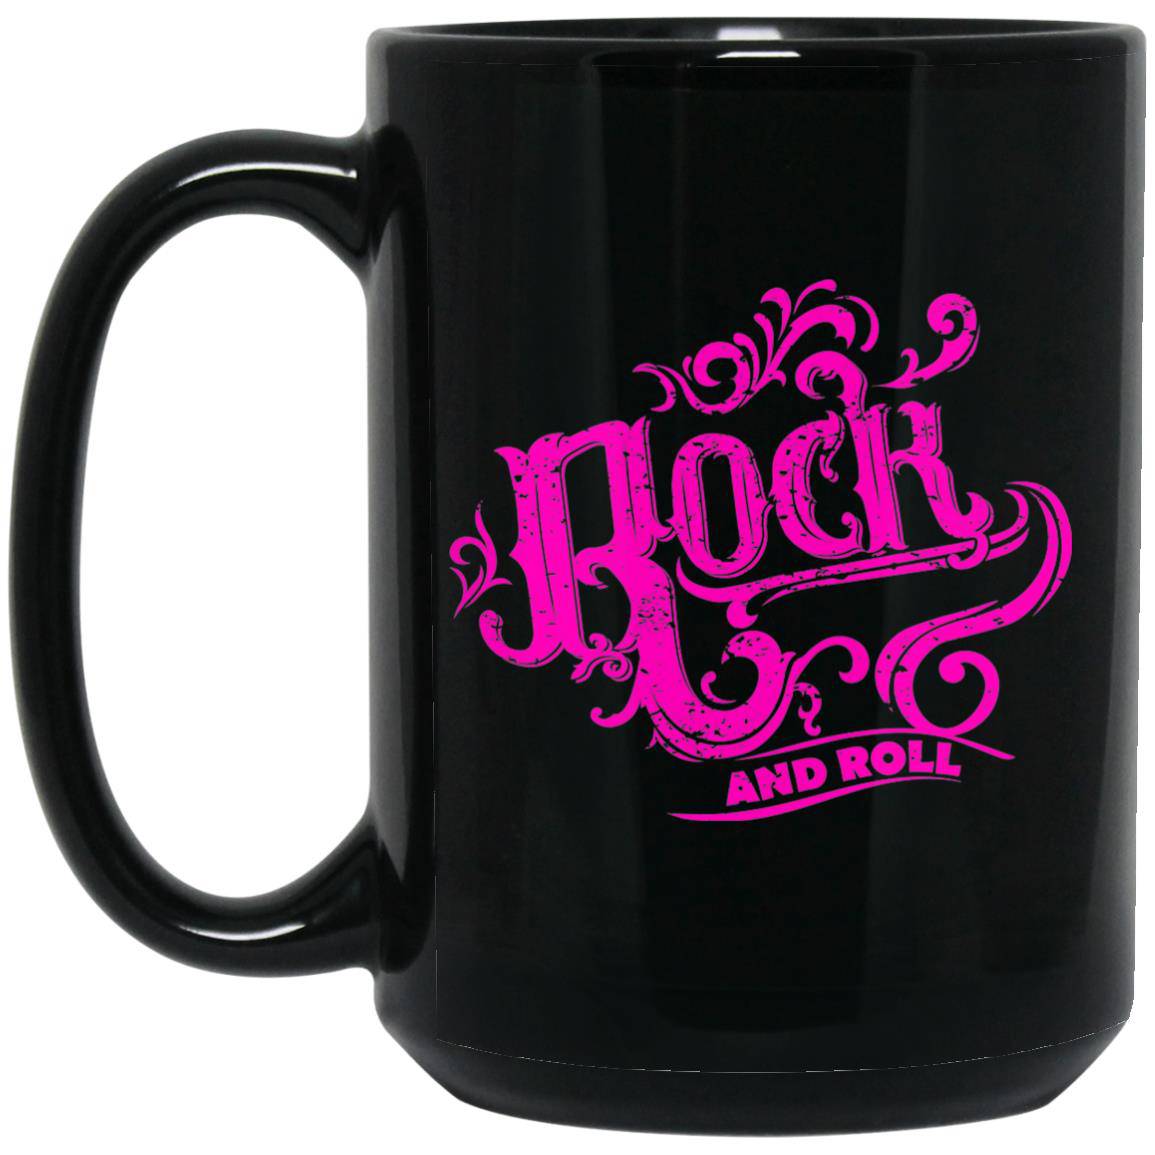 Rock and Roll 15 oz. Black Mug Pink text - Expressive DeZien 